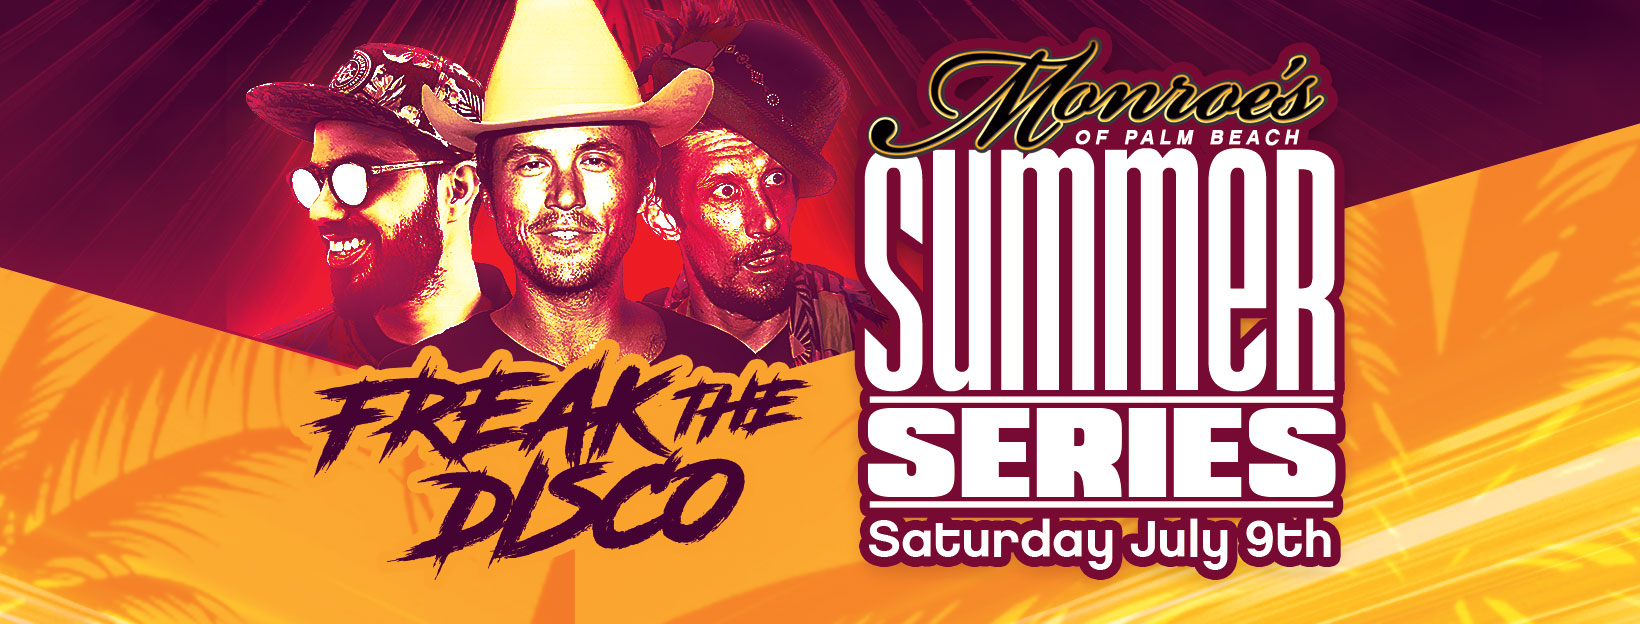 DJ Freak the Disco Monroe's Summer Series Saturday July 9th